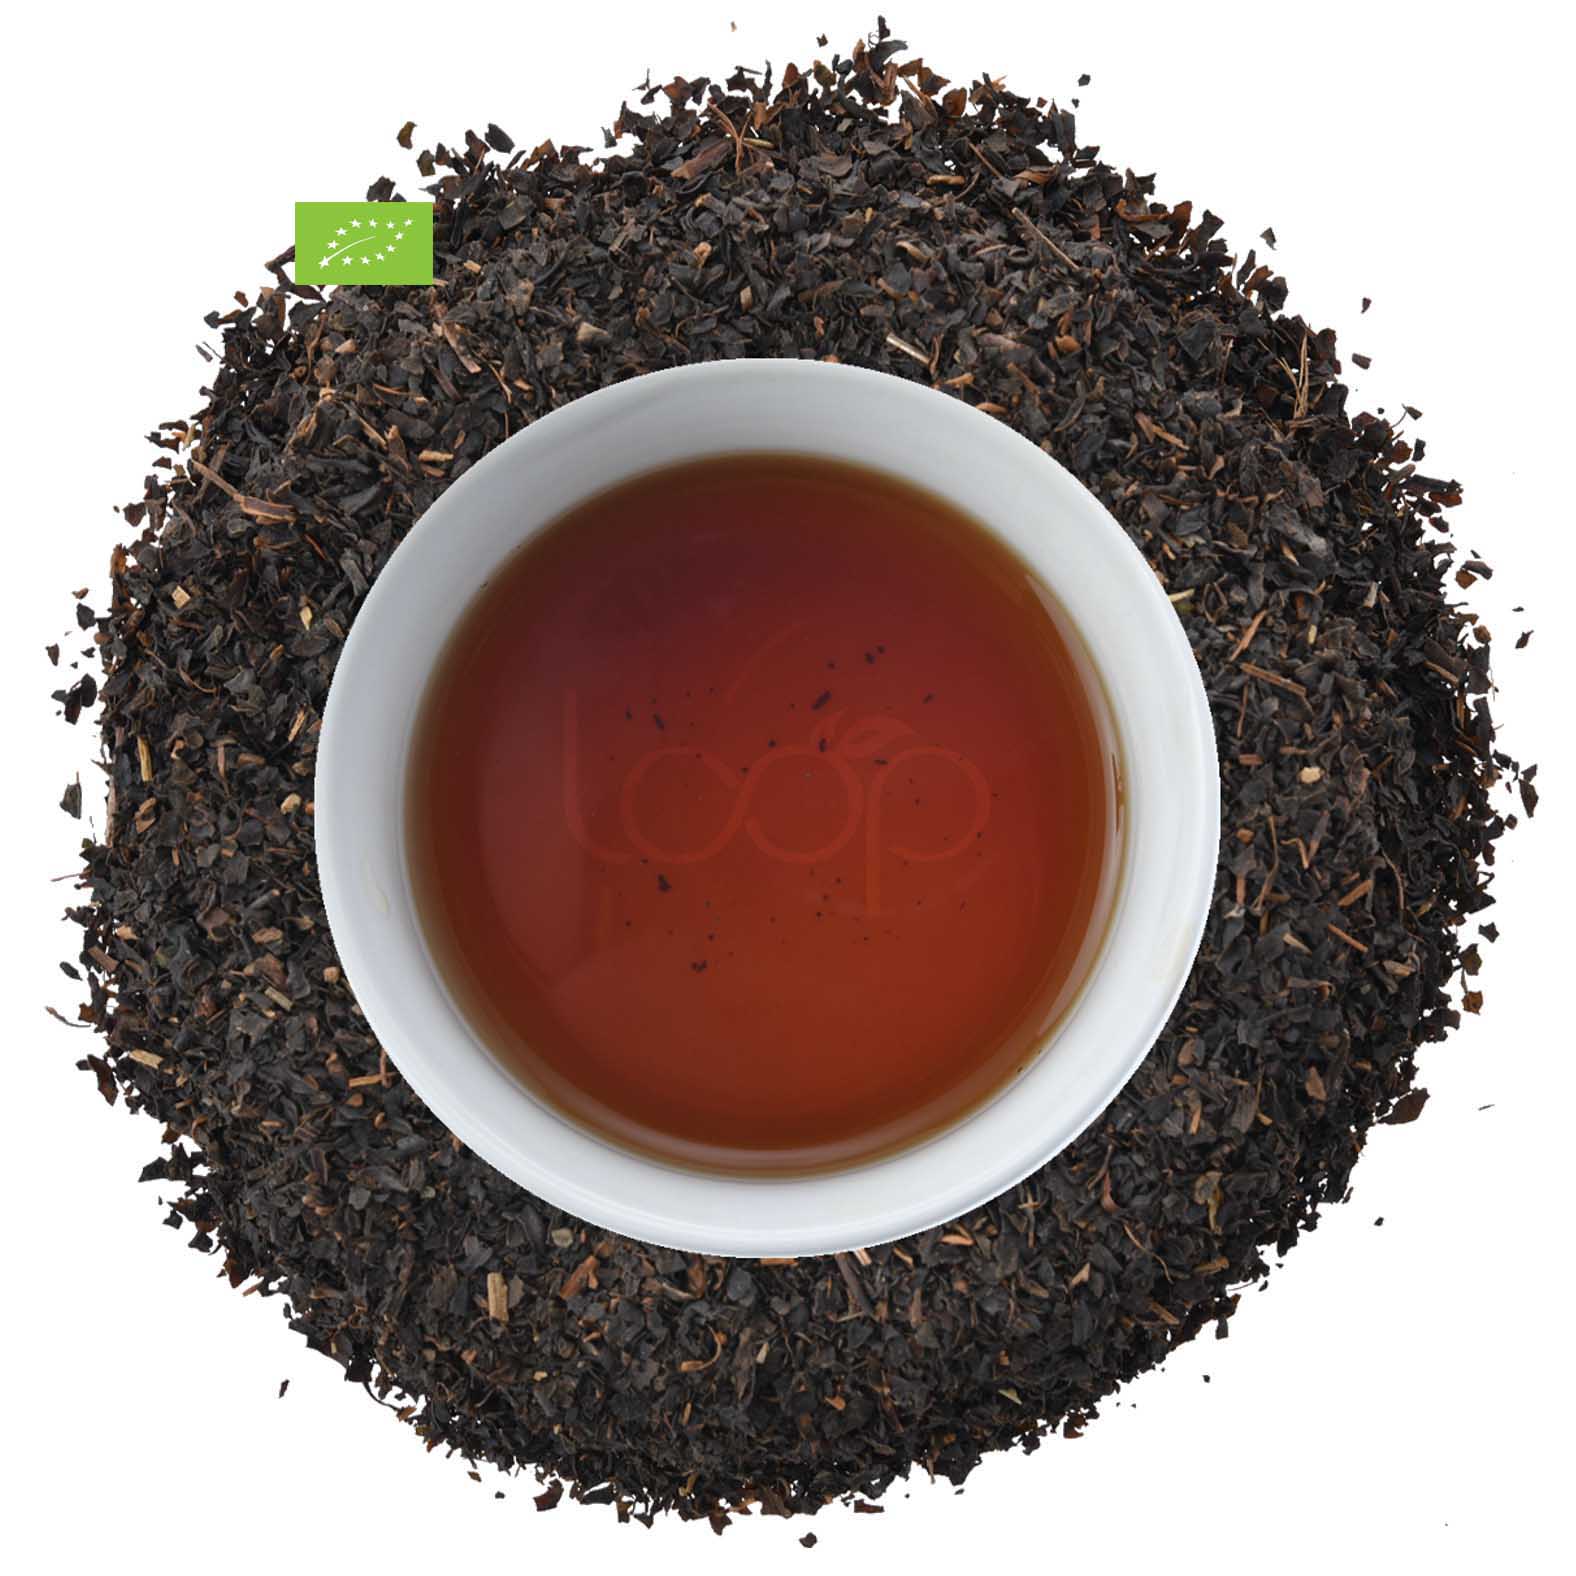 Organic Black Tea Fannings China Teas